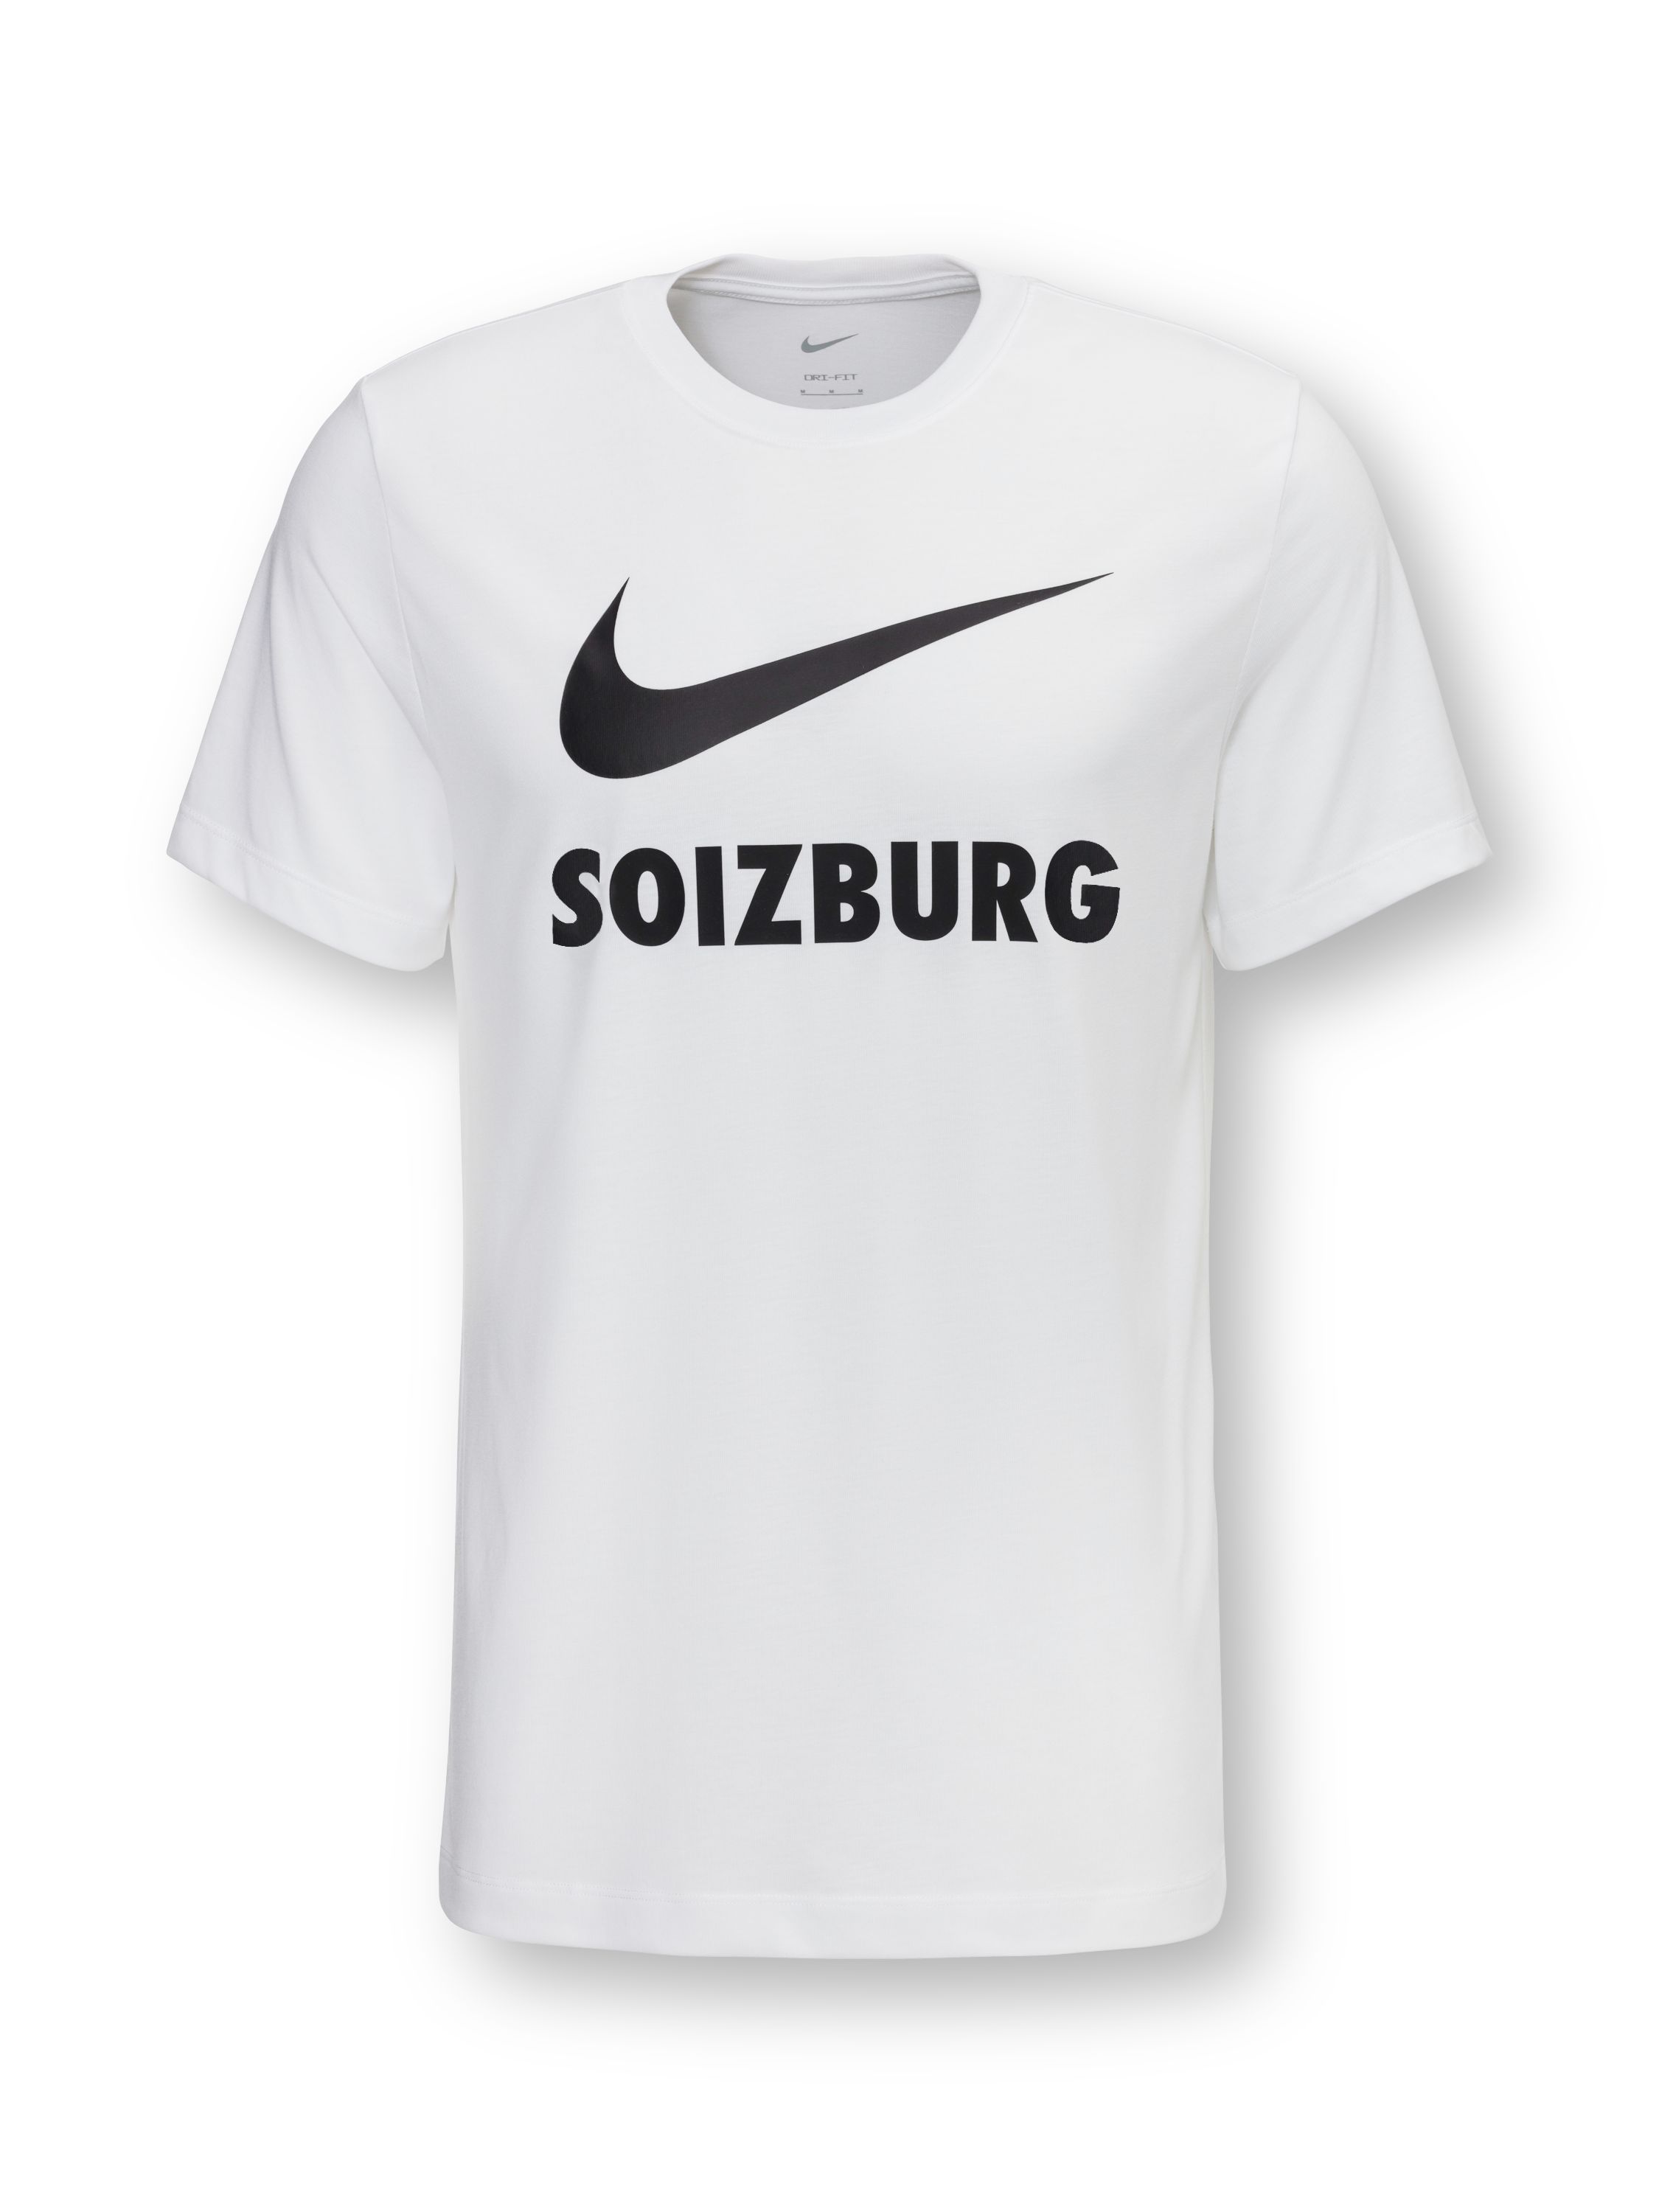 FC Red Bull Salzburg Shop: RBS Nike Away Jersey 23/24